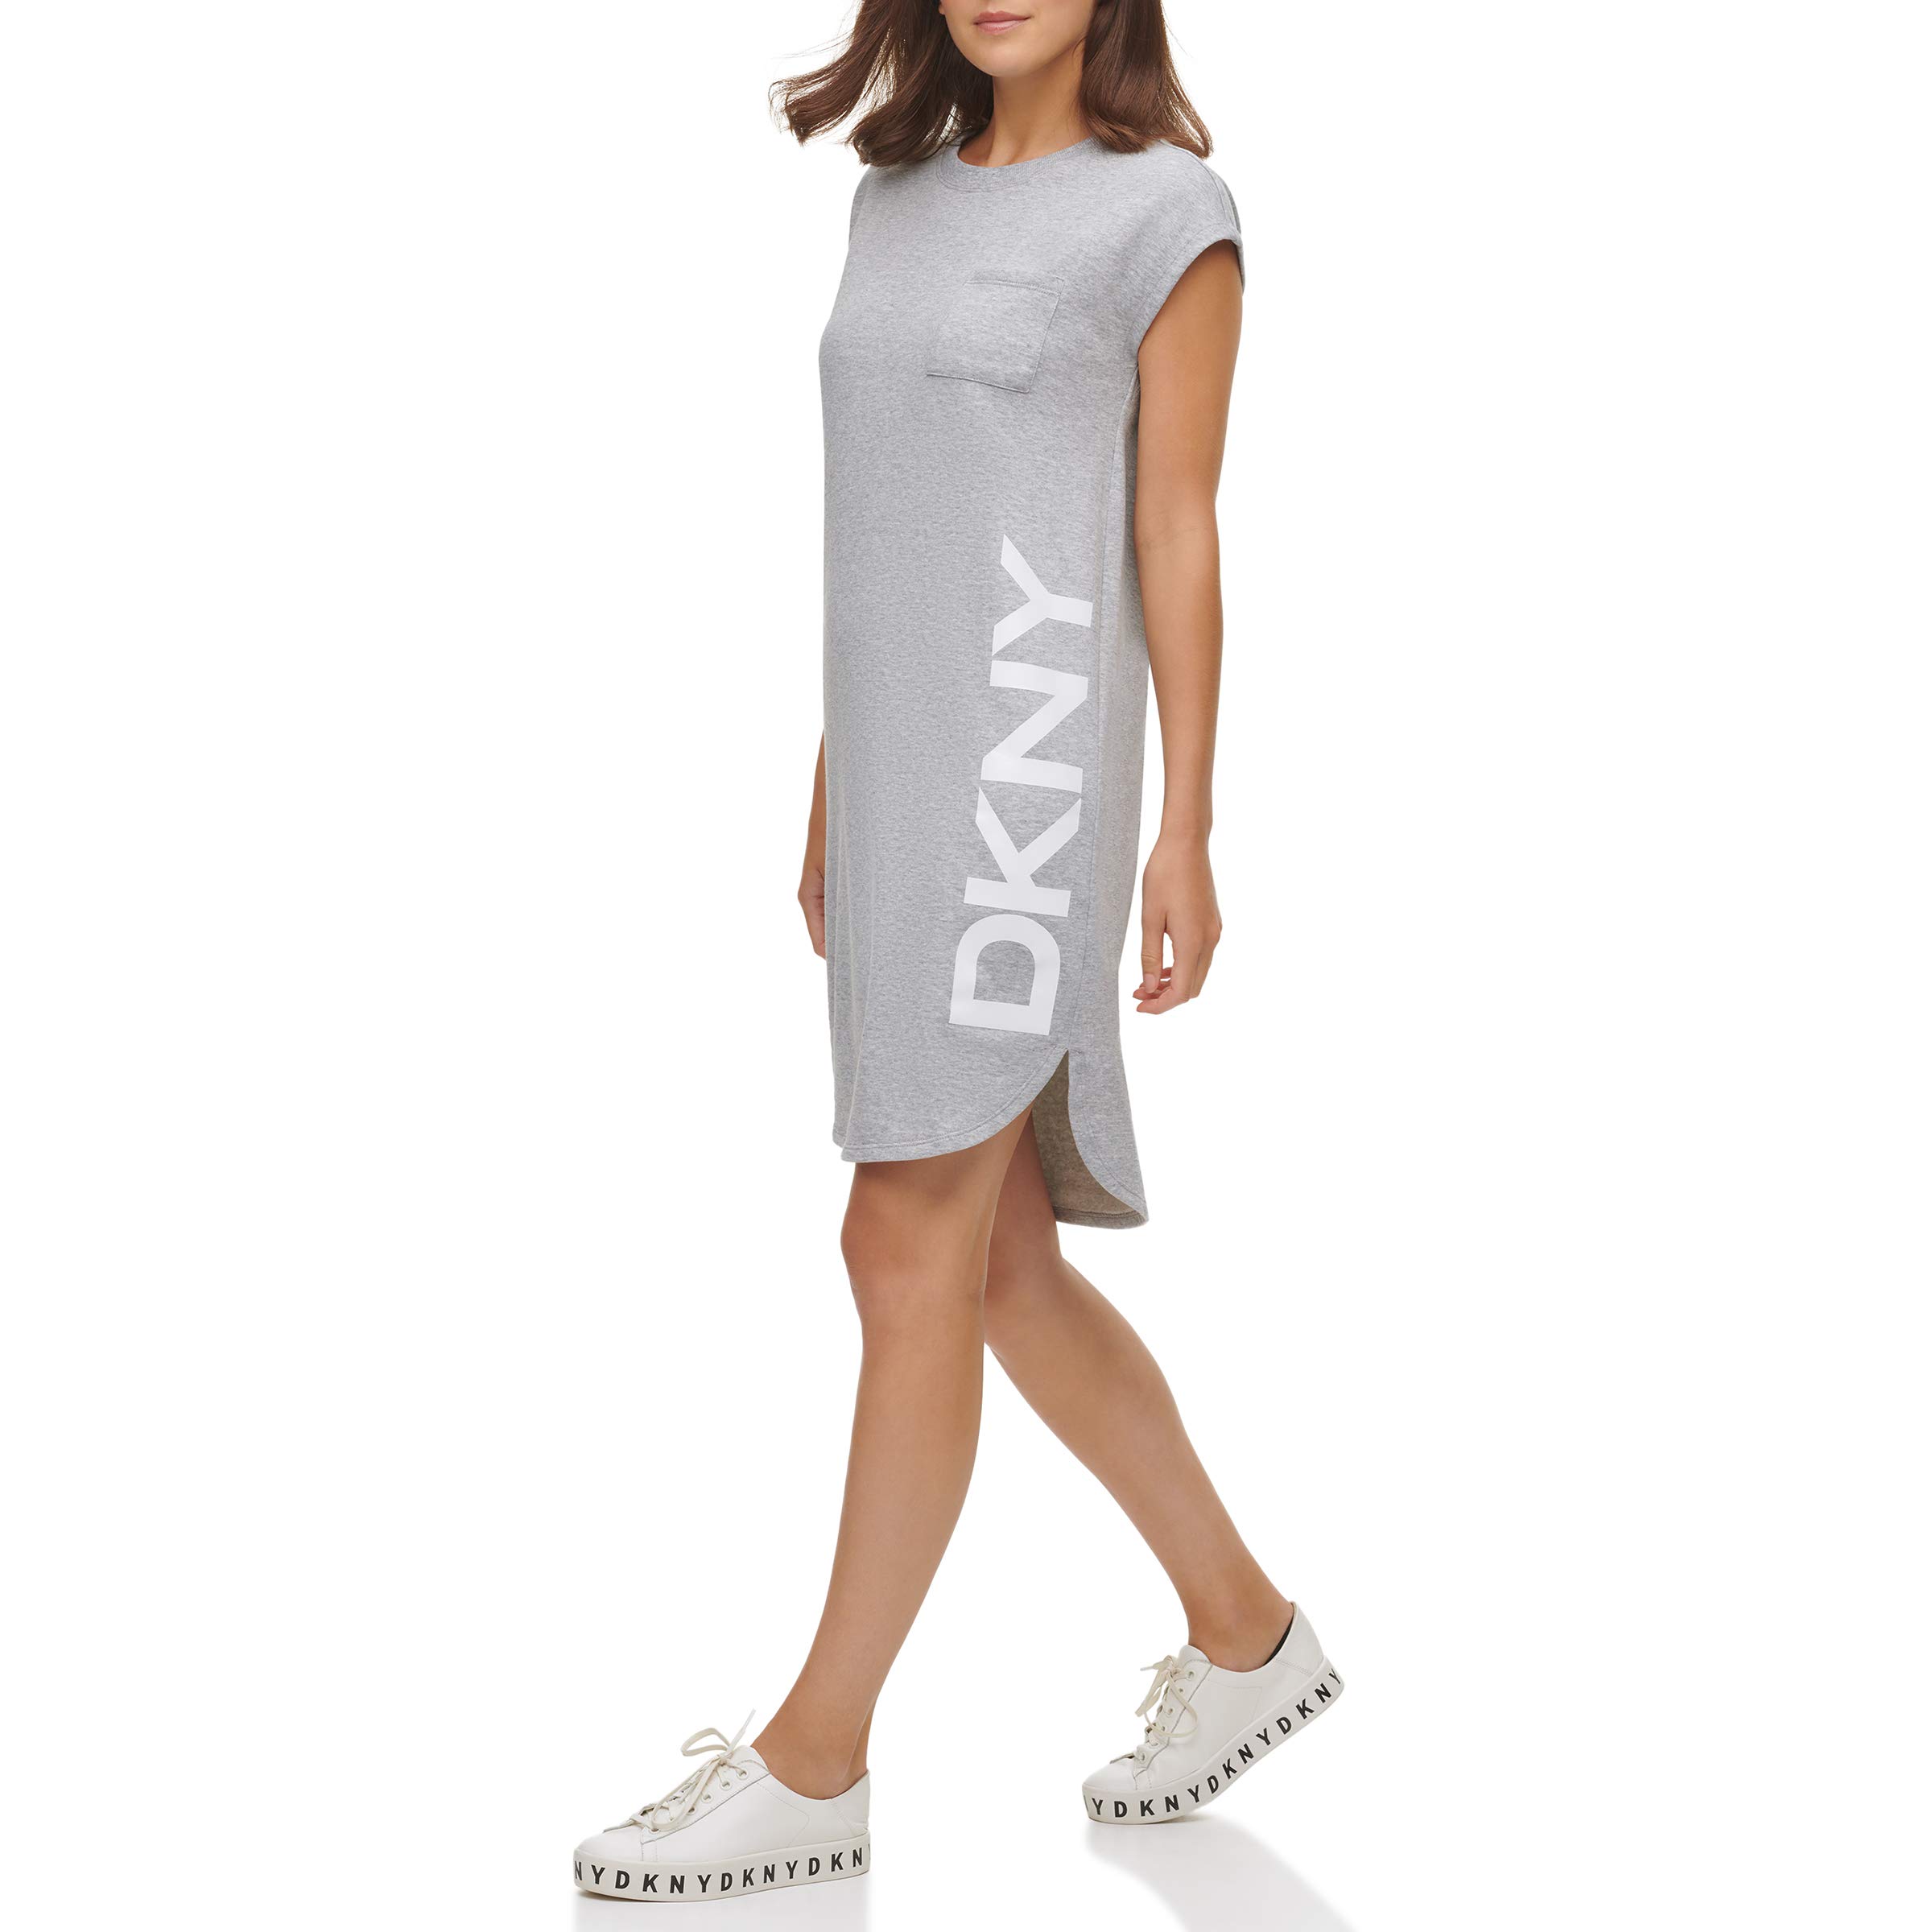 DKNY SPORTSWEAR Womens Missy Cap Sleeve Logo T-Shirt